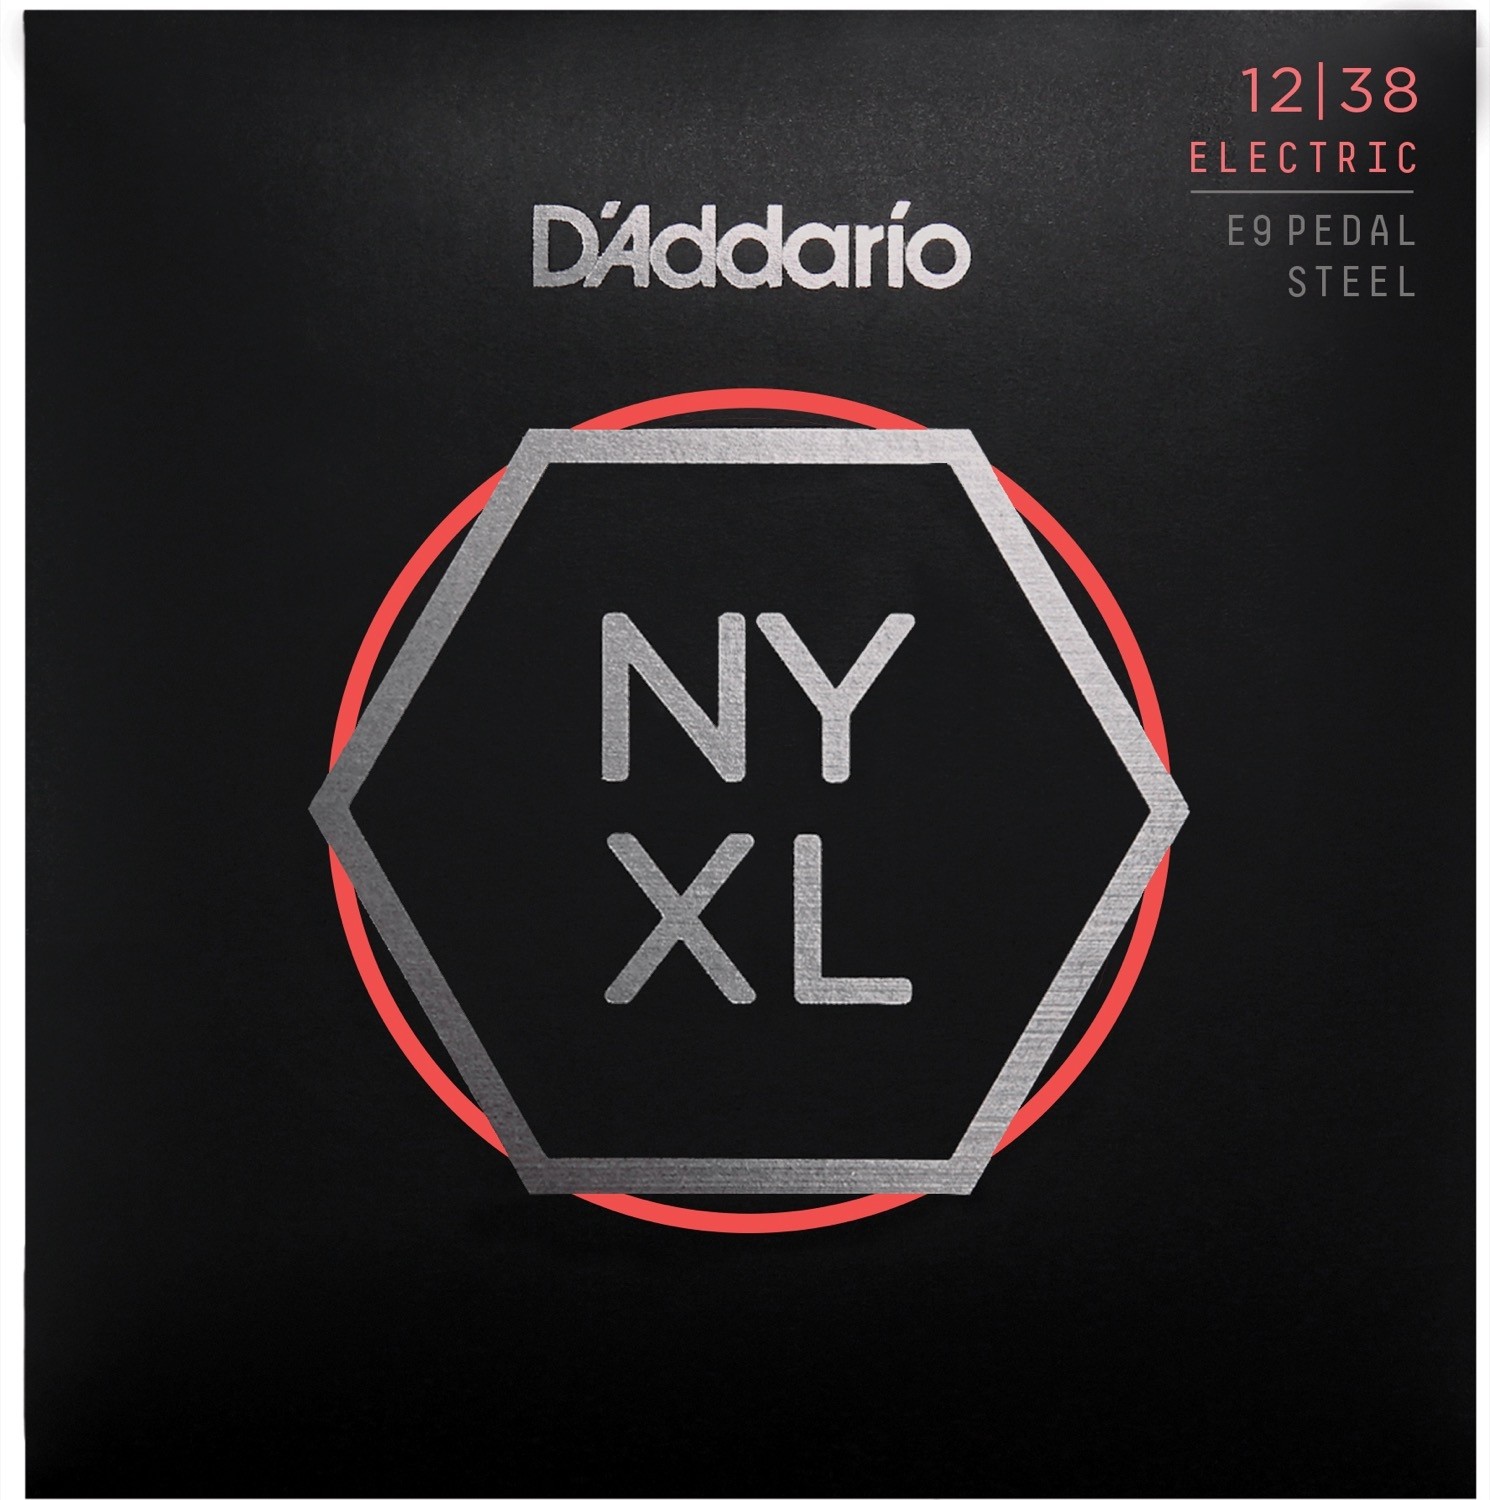 D'Addario Fretted NYXL1238PS 012-038 NYXL Pedal Steel E9